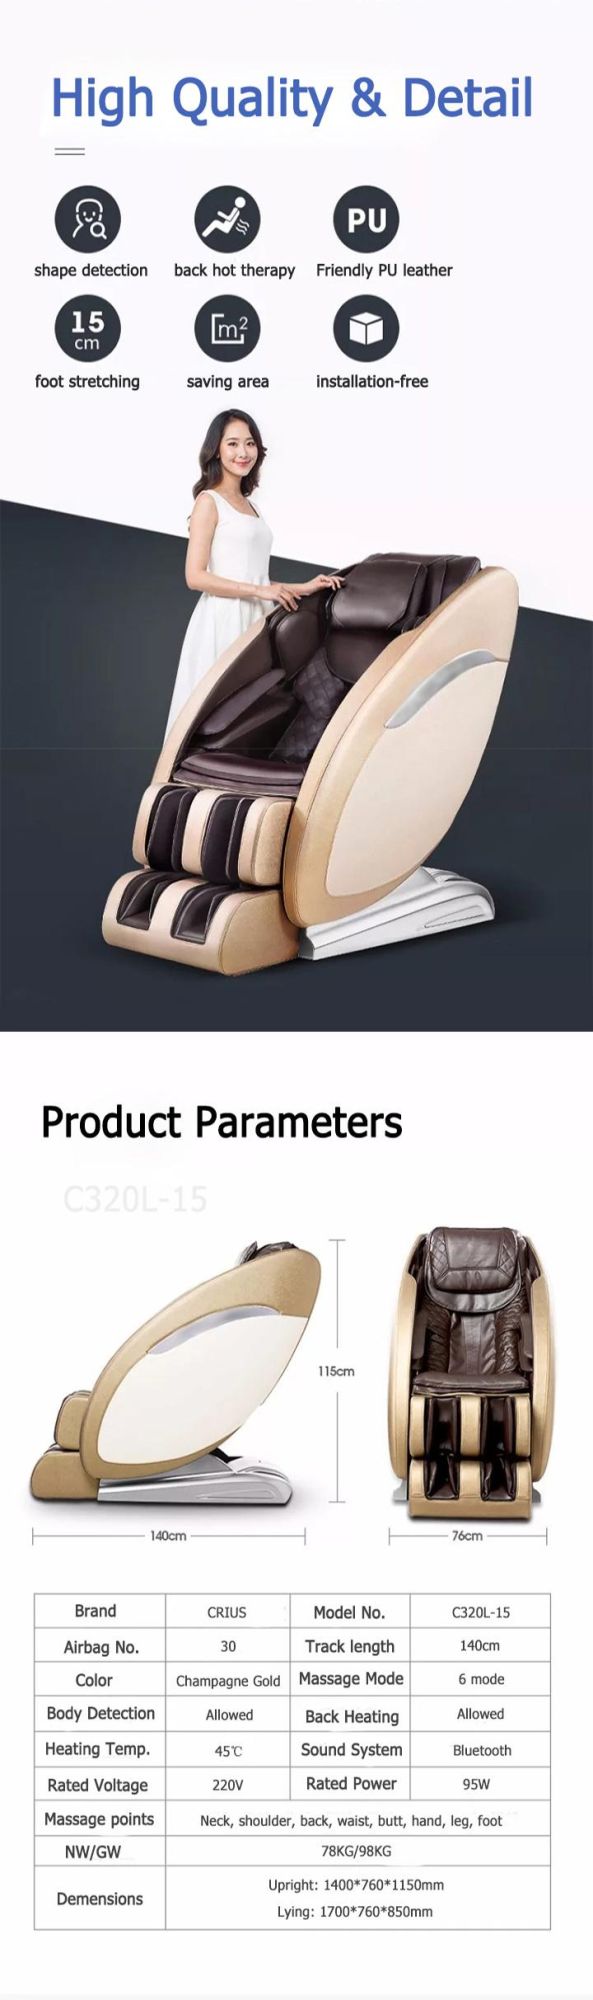 Luxury Lengthen SL Track Whole Body Medical Zero Gravity Massage Chair